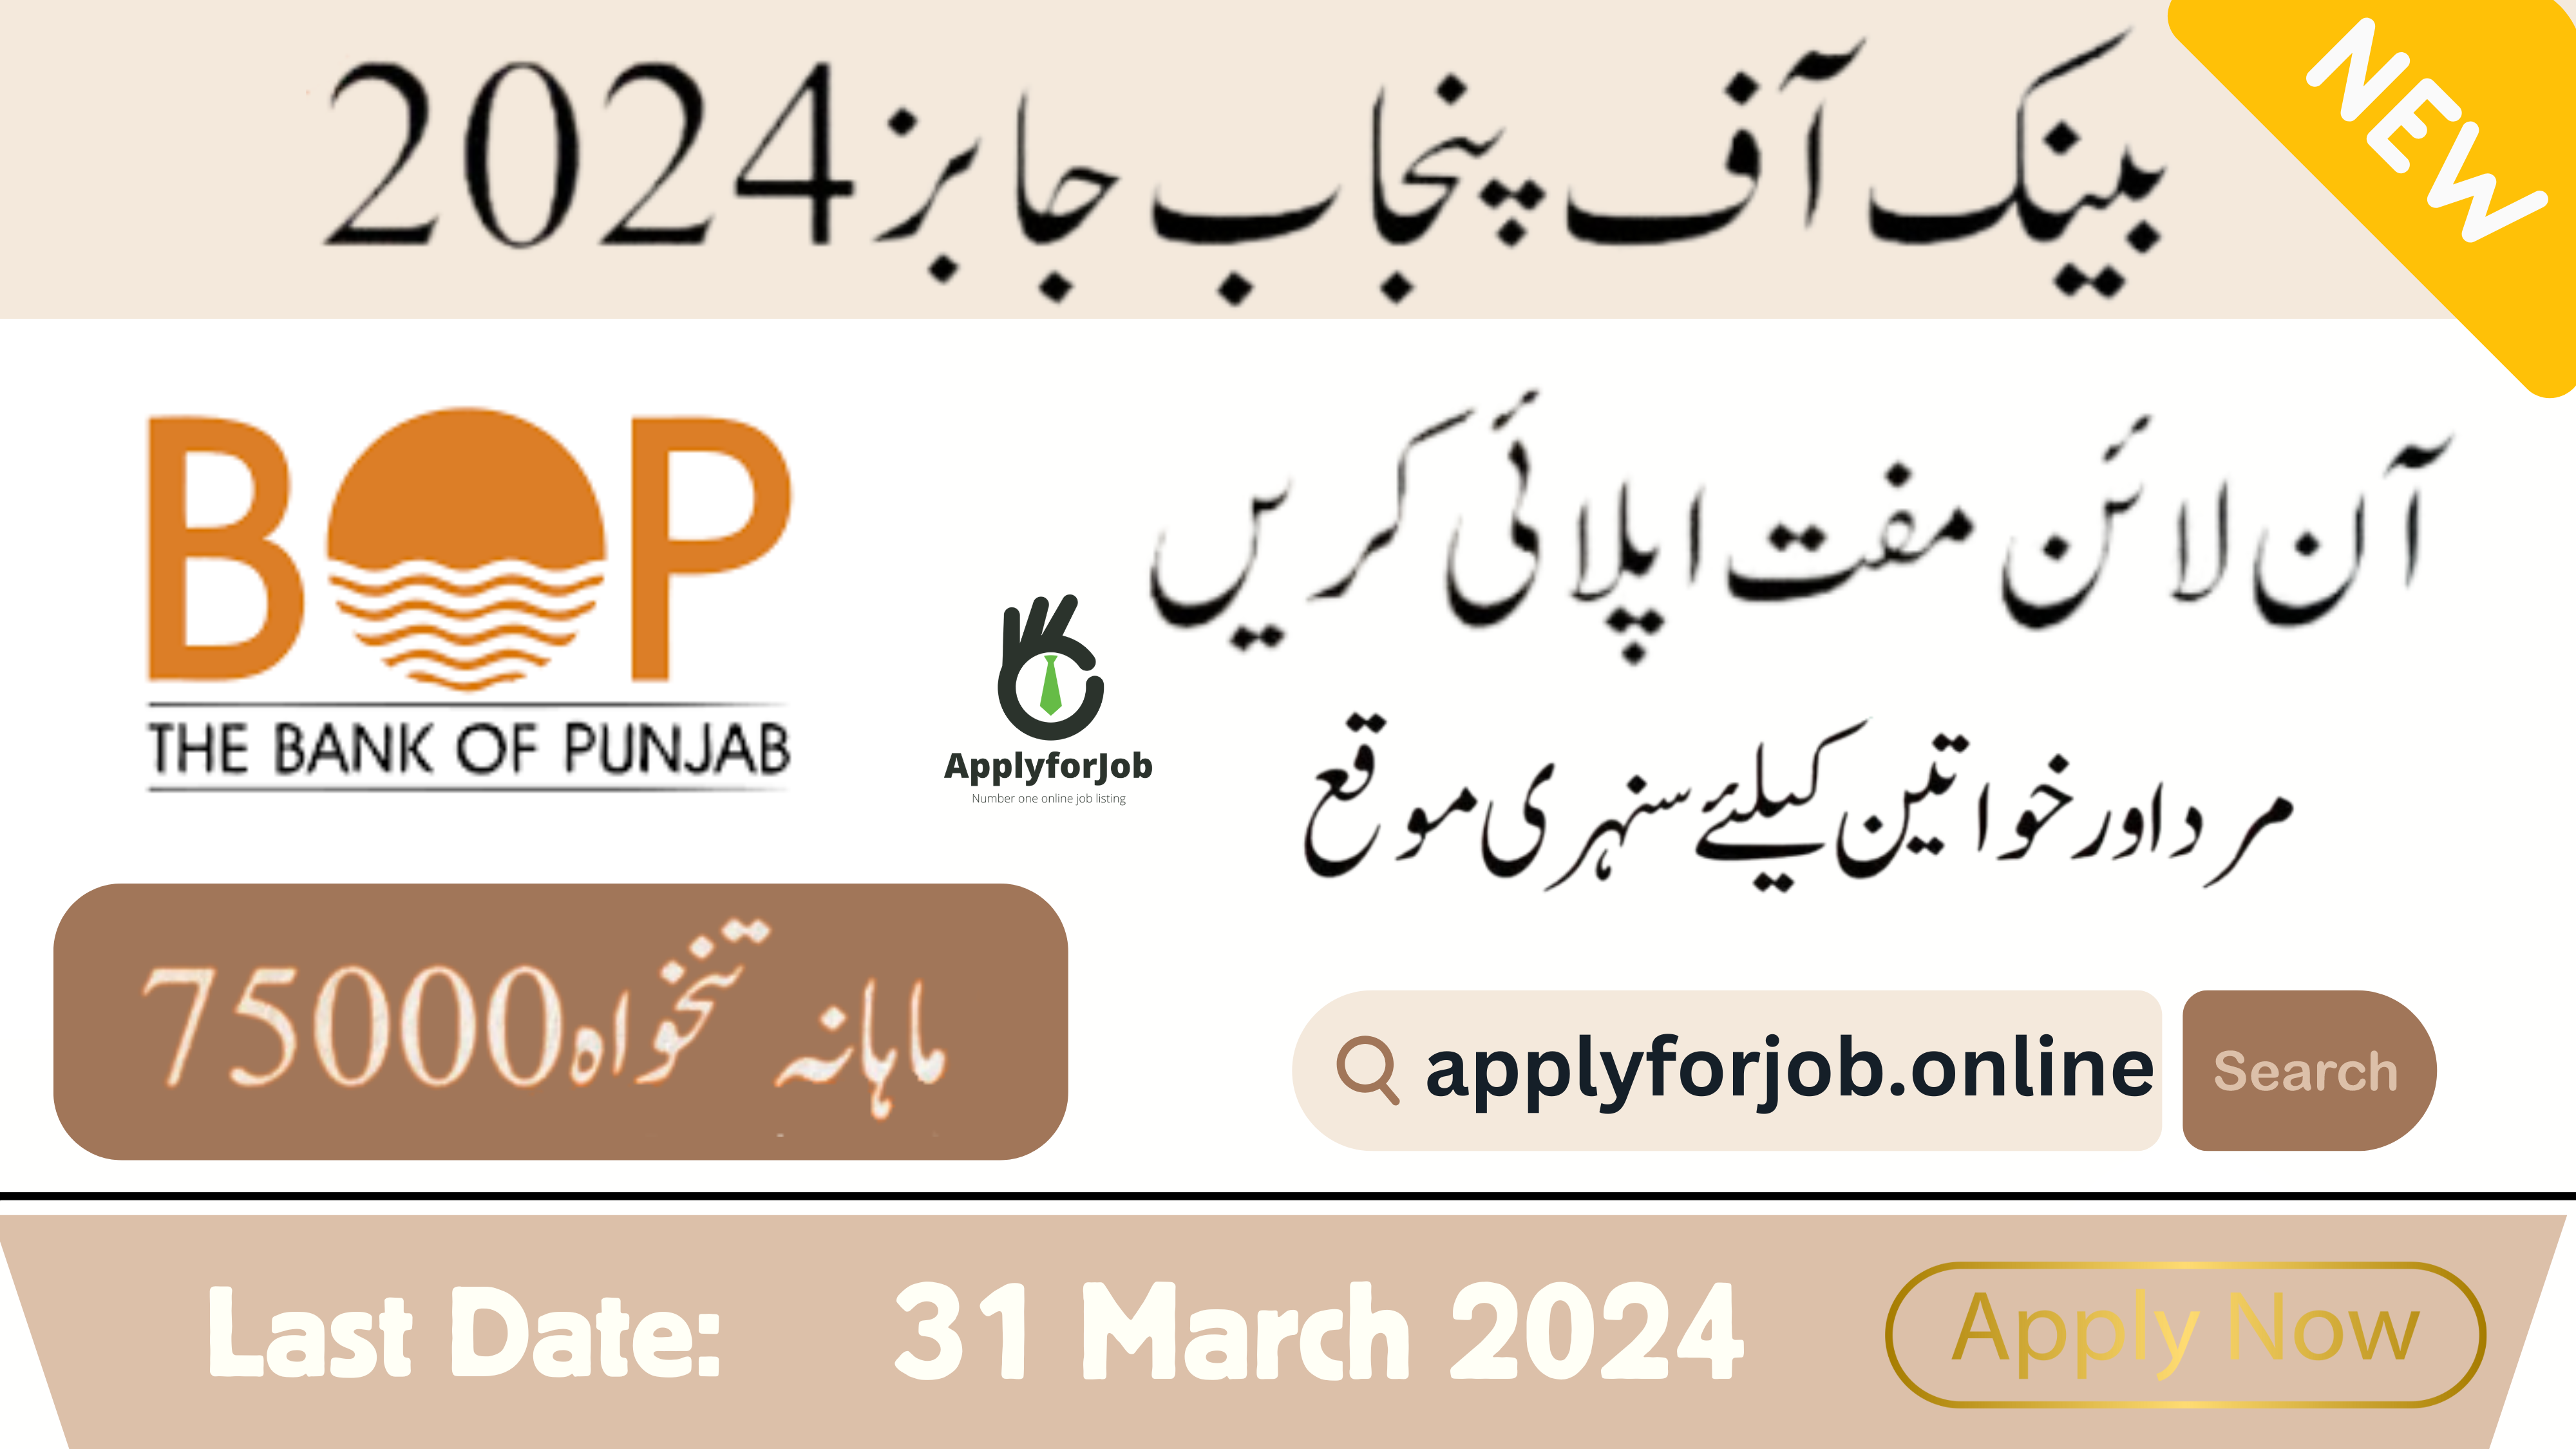 Bank of Punjab Jobs Apply for Job Online-ApplyforJob